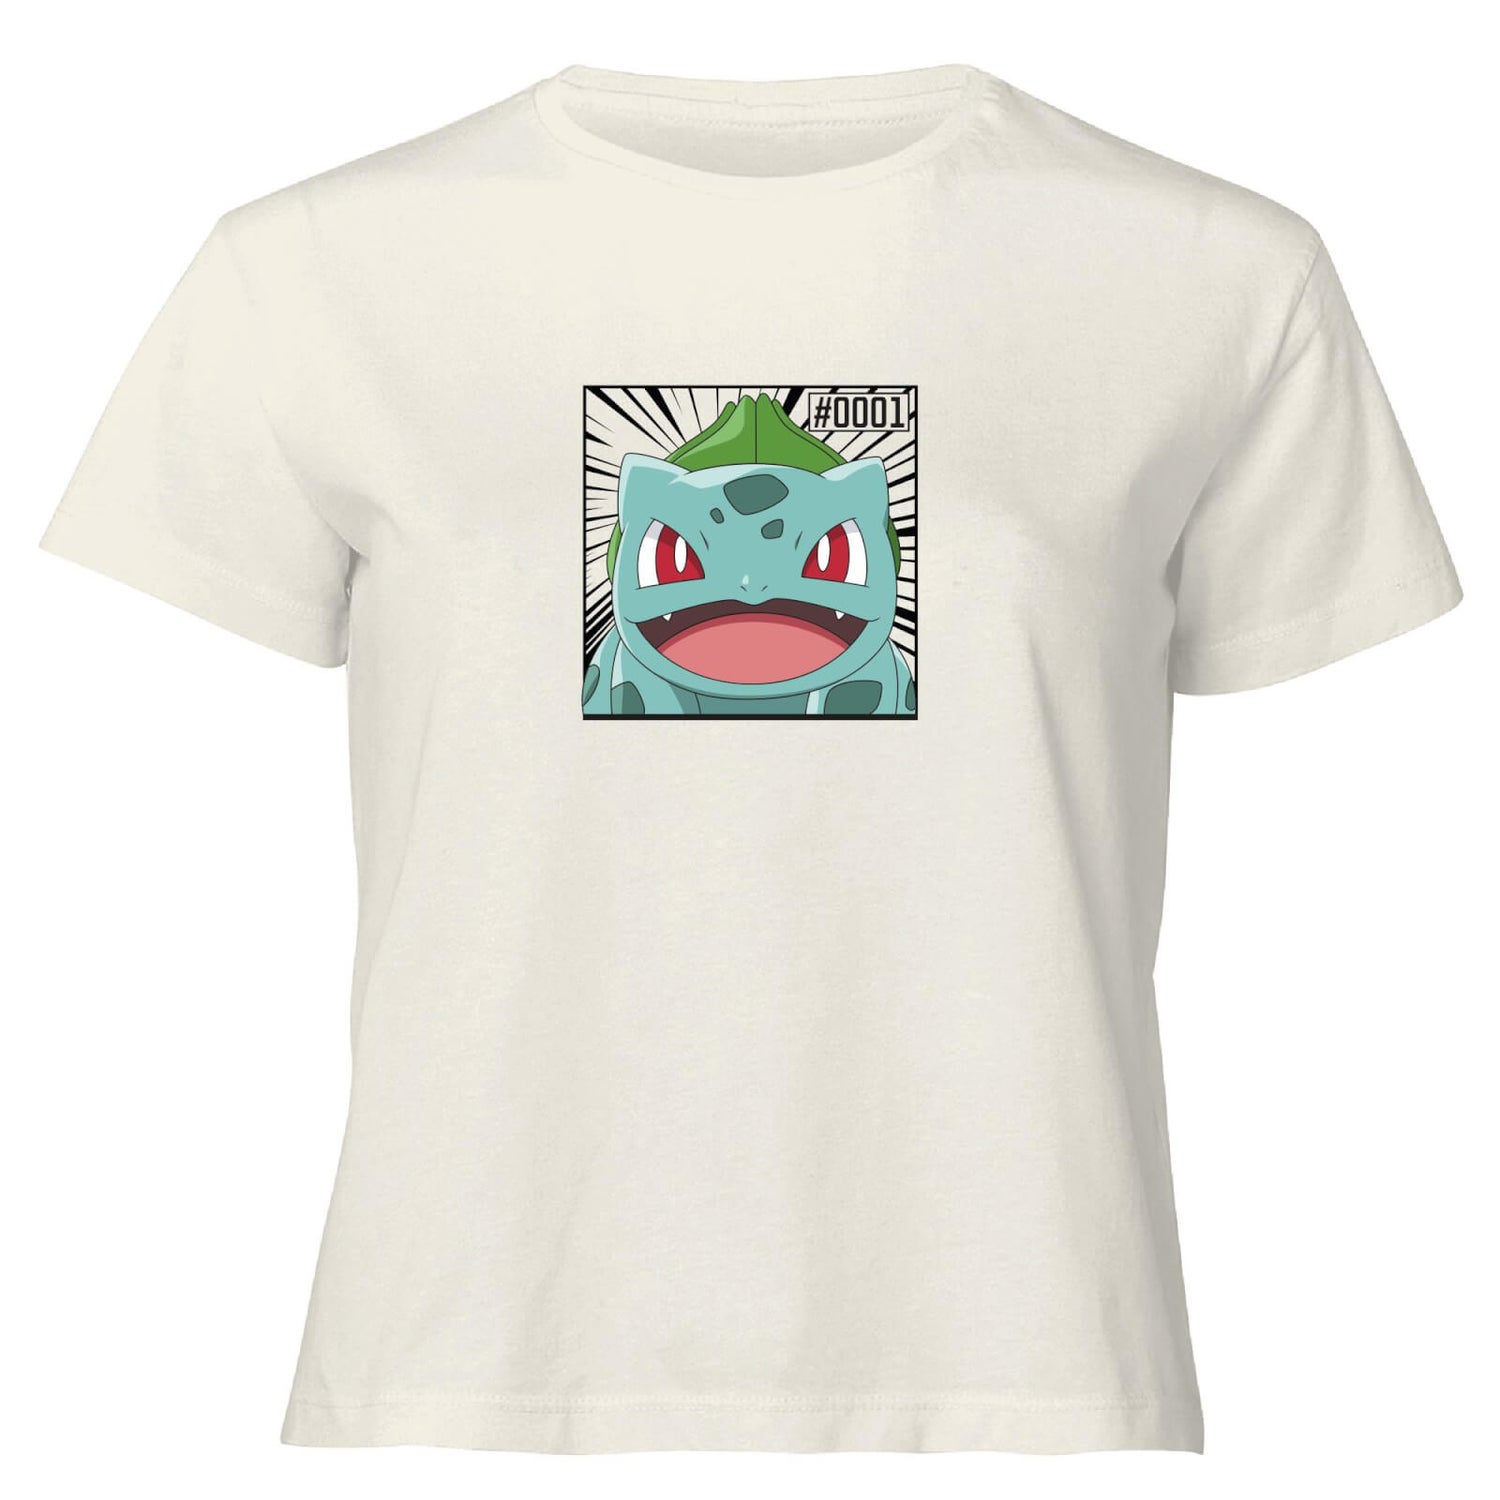 Pokémon Pokédex Bulbasaur #0001 Women's Cropped T-Shirt - Cream